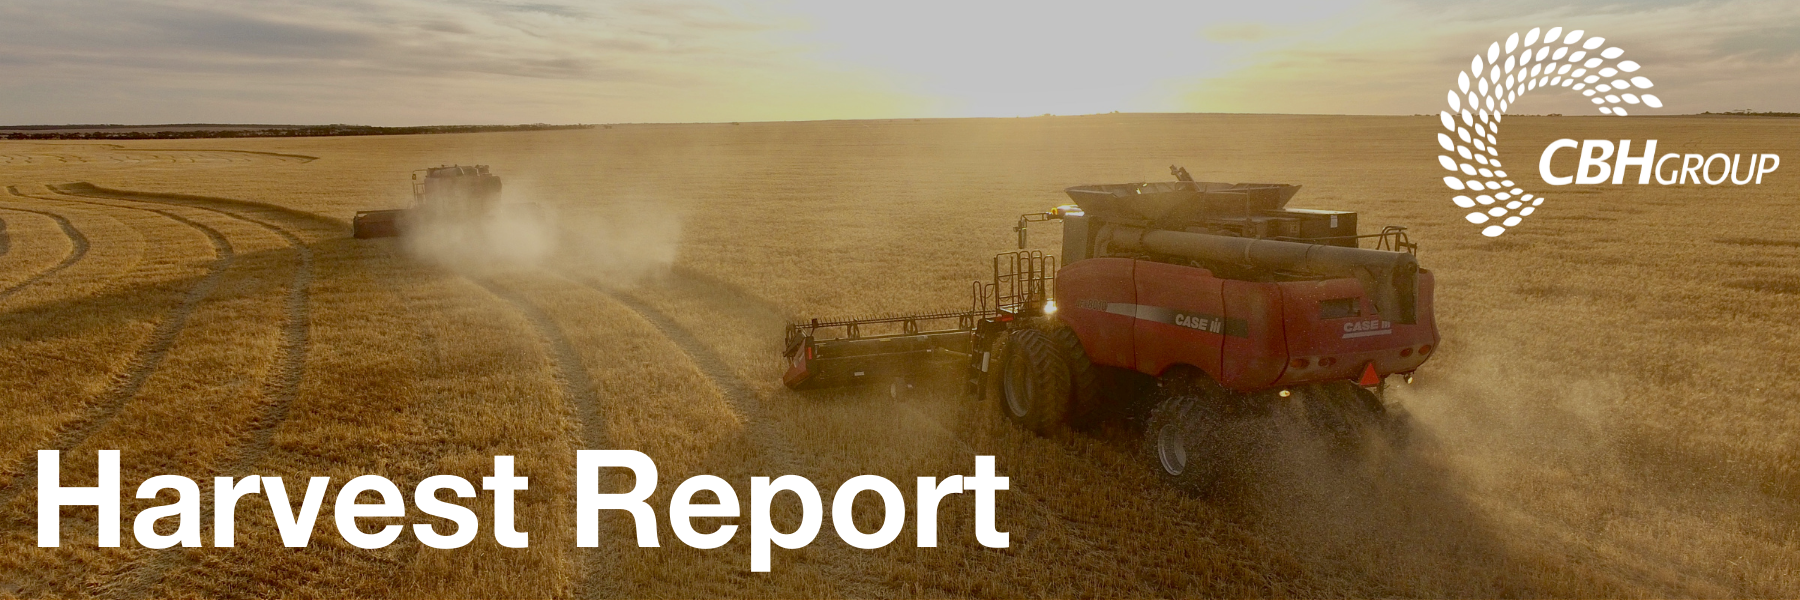 CBH 2021/22 Harvest Report